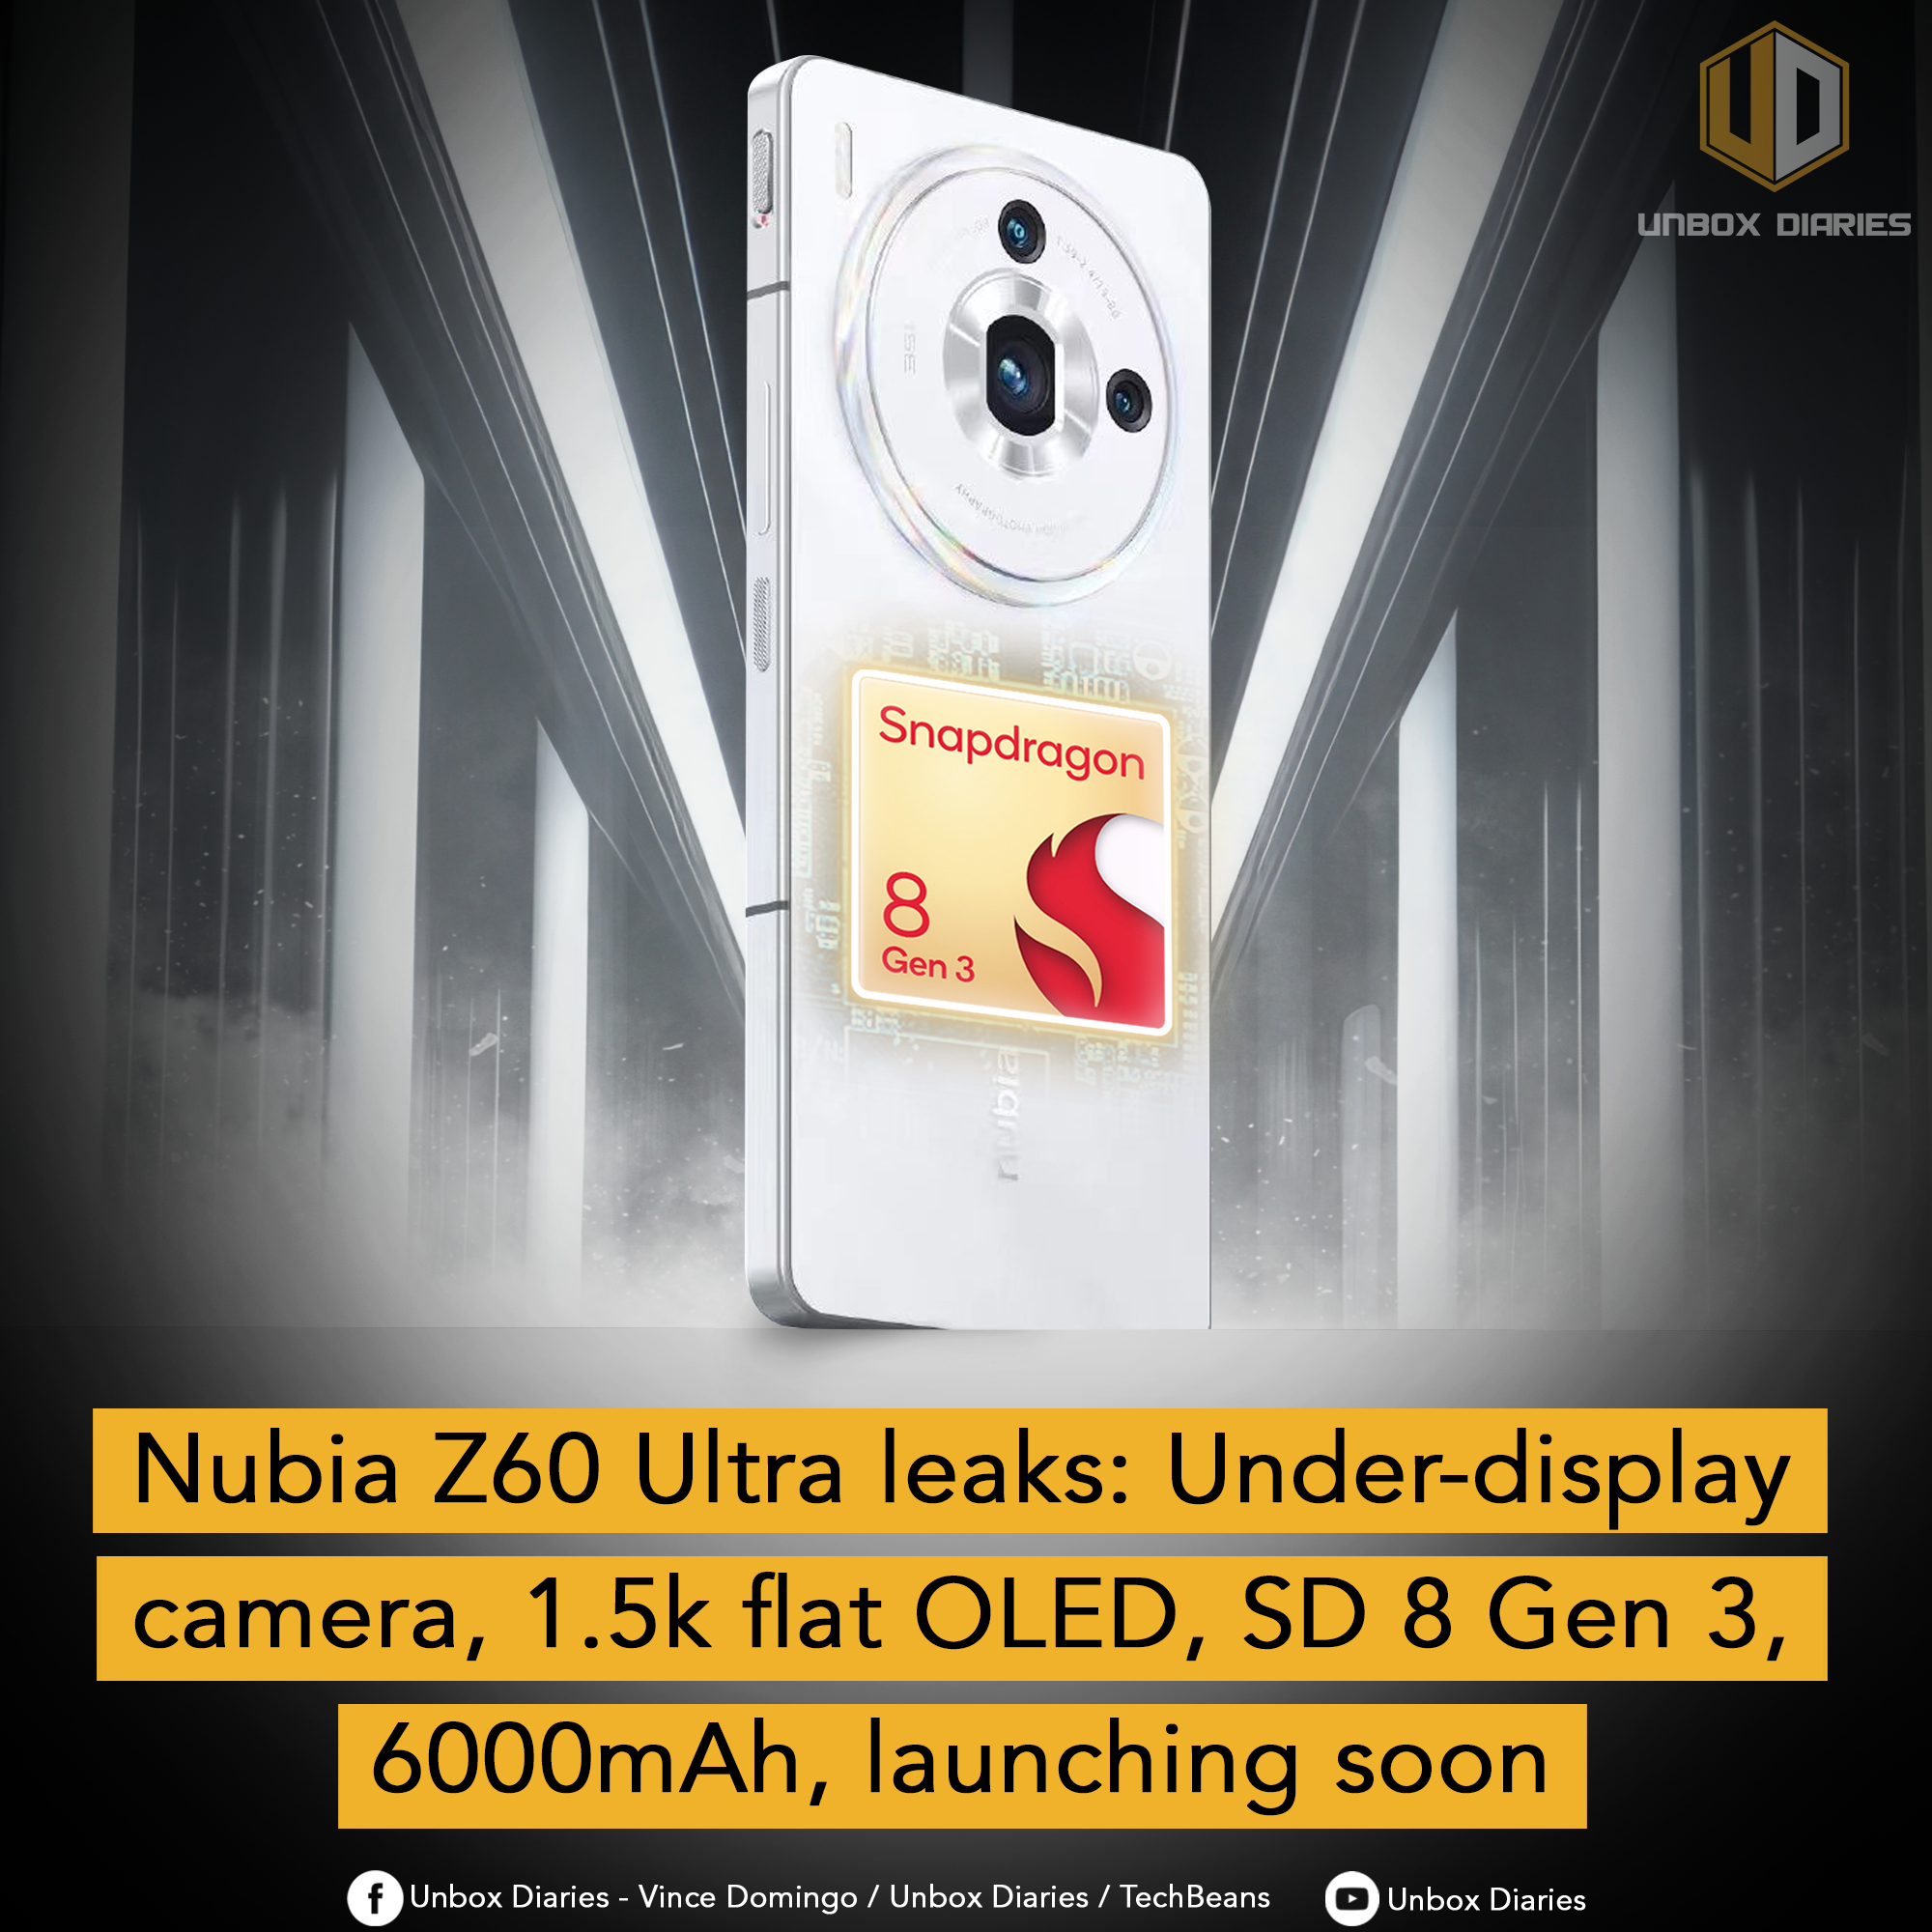 Nubia Z60 Ultra leaks: Under-display camera, 1.5k flat OLED, SD 8 Gen 3,  6000mAh, launching soon - Unbox Diaries